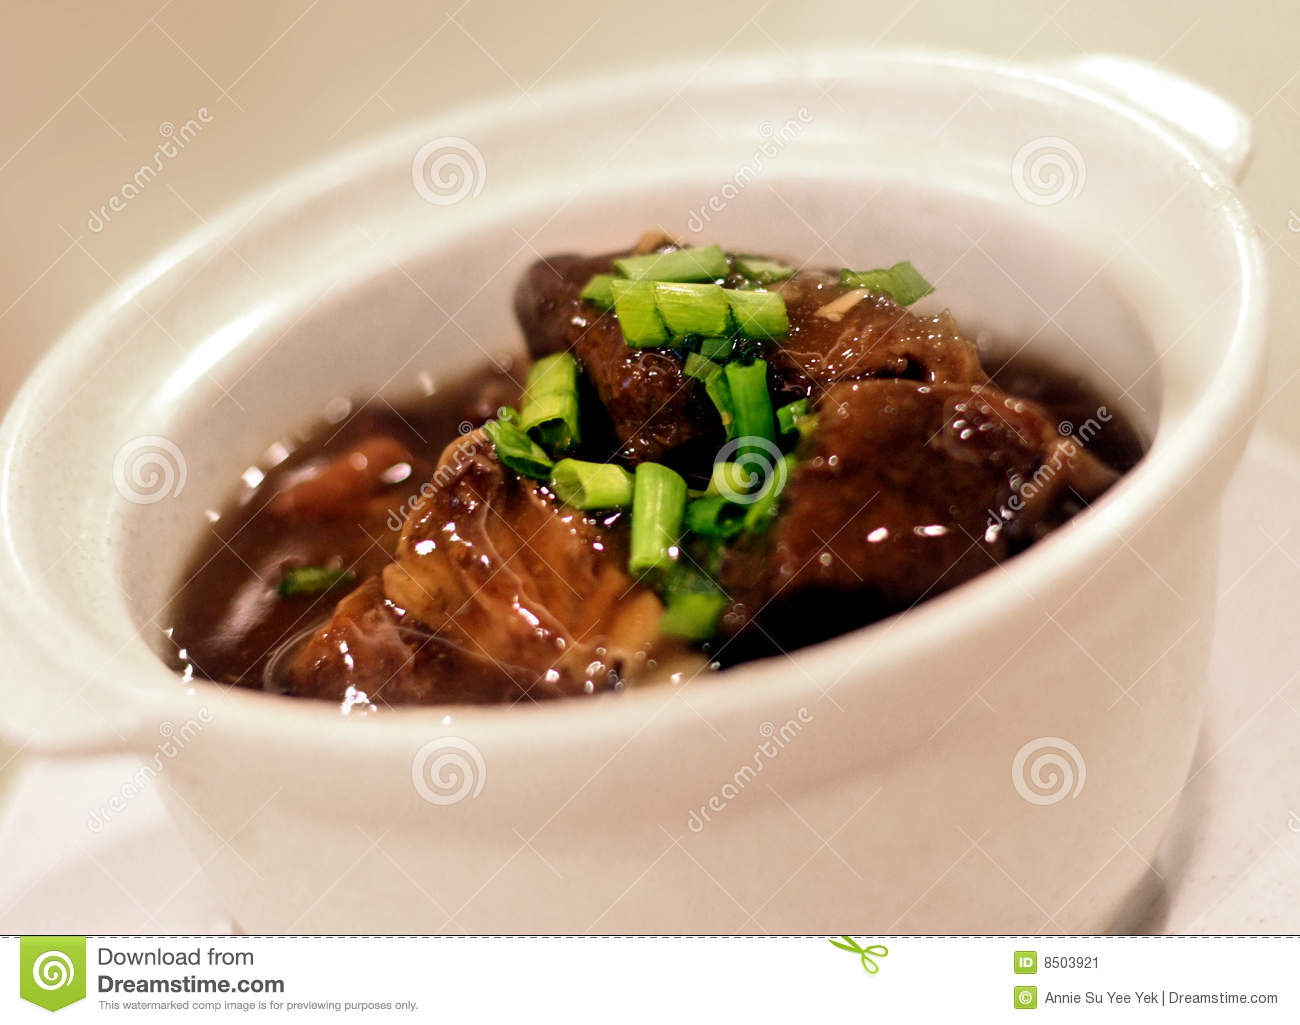 Beef Stew Stock Image   Image  8503921